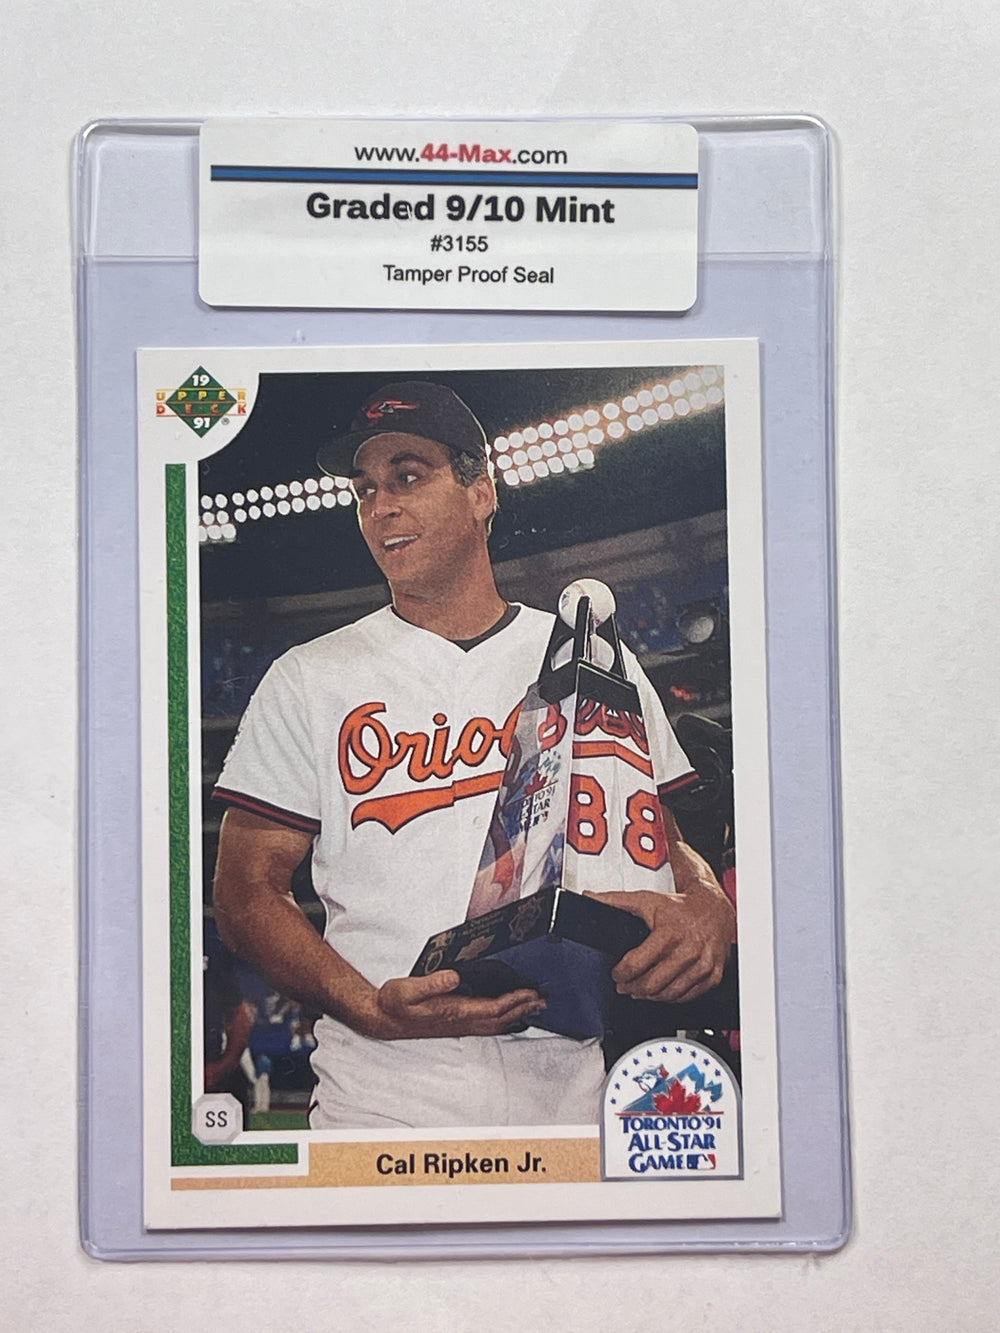 Cal Ripken Jr 1991 FE Upper Deck Baseball Card. 44-Max 9/10 MINT #3155